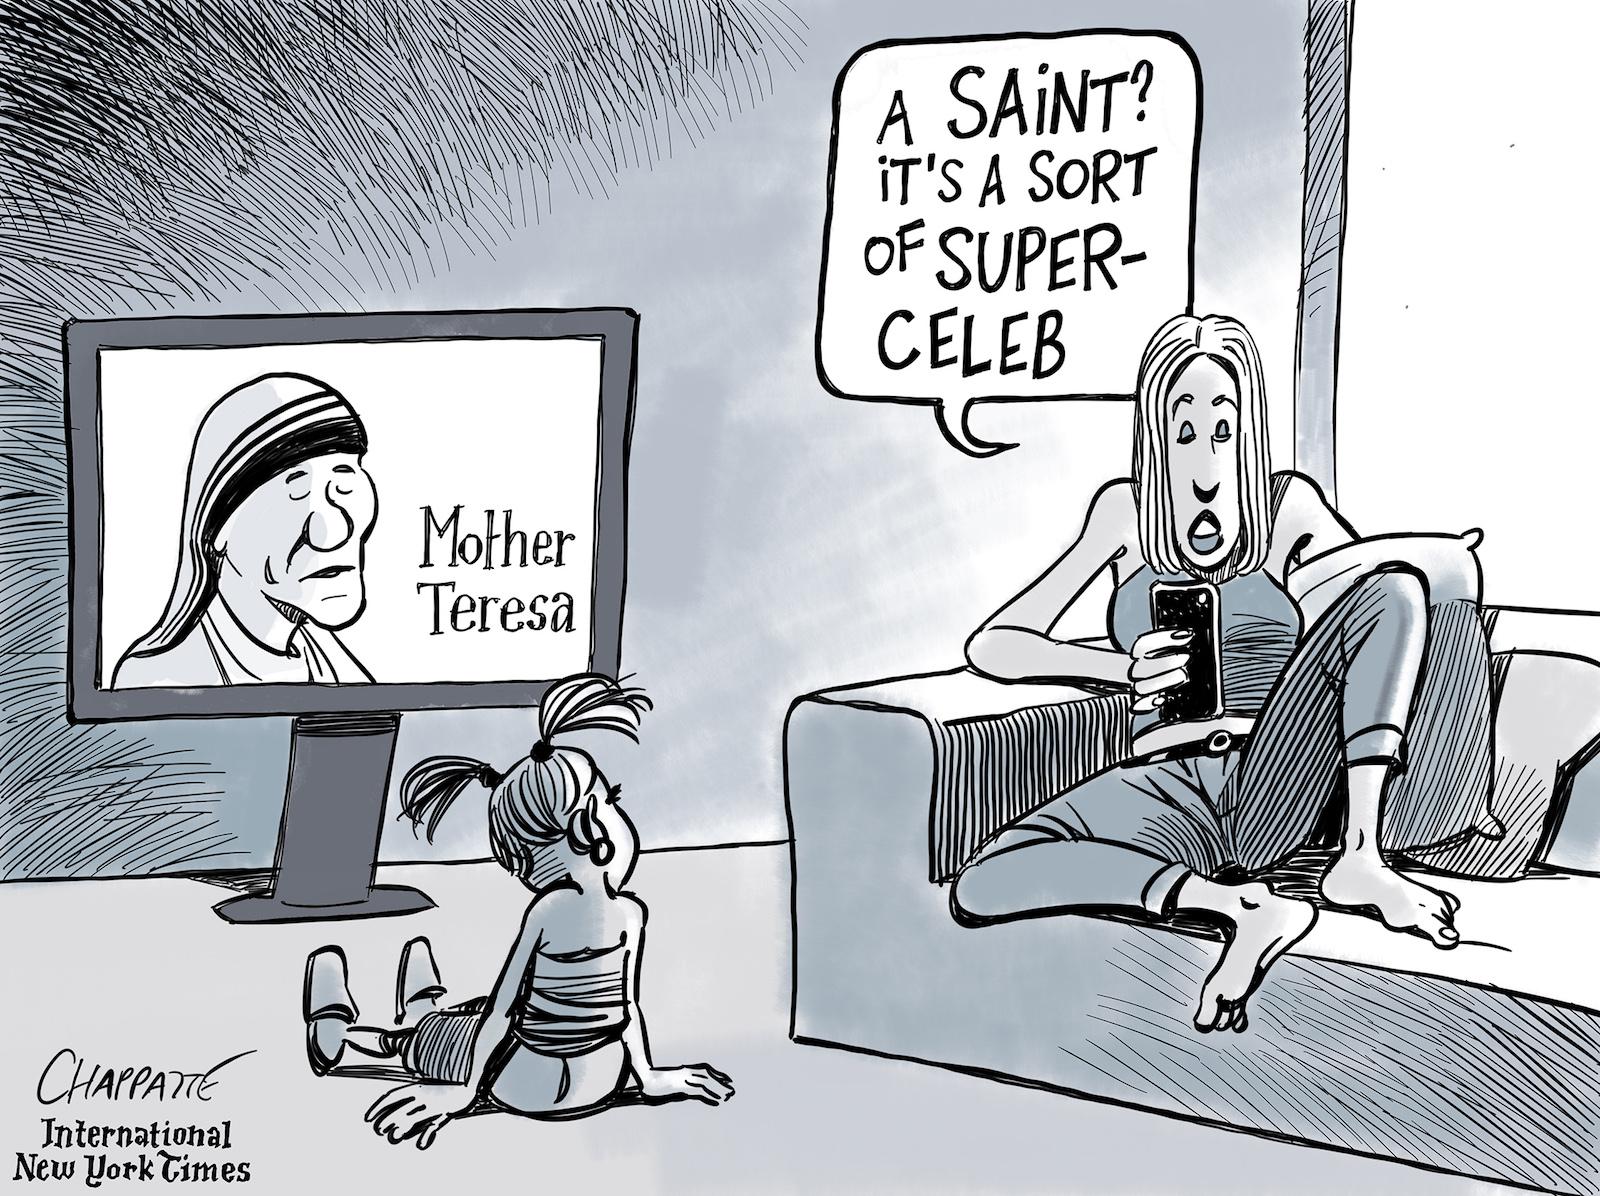 Mother Teresa is a saint